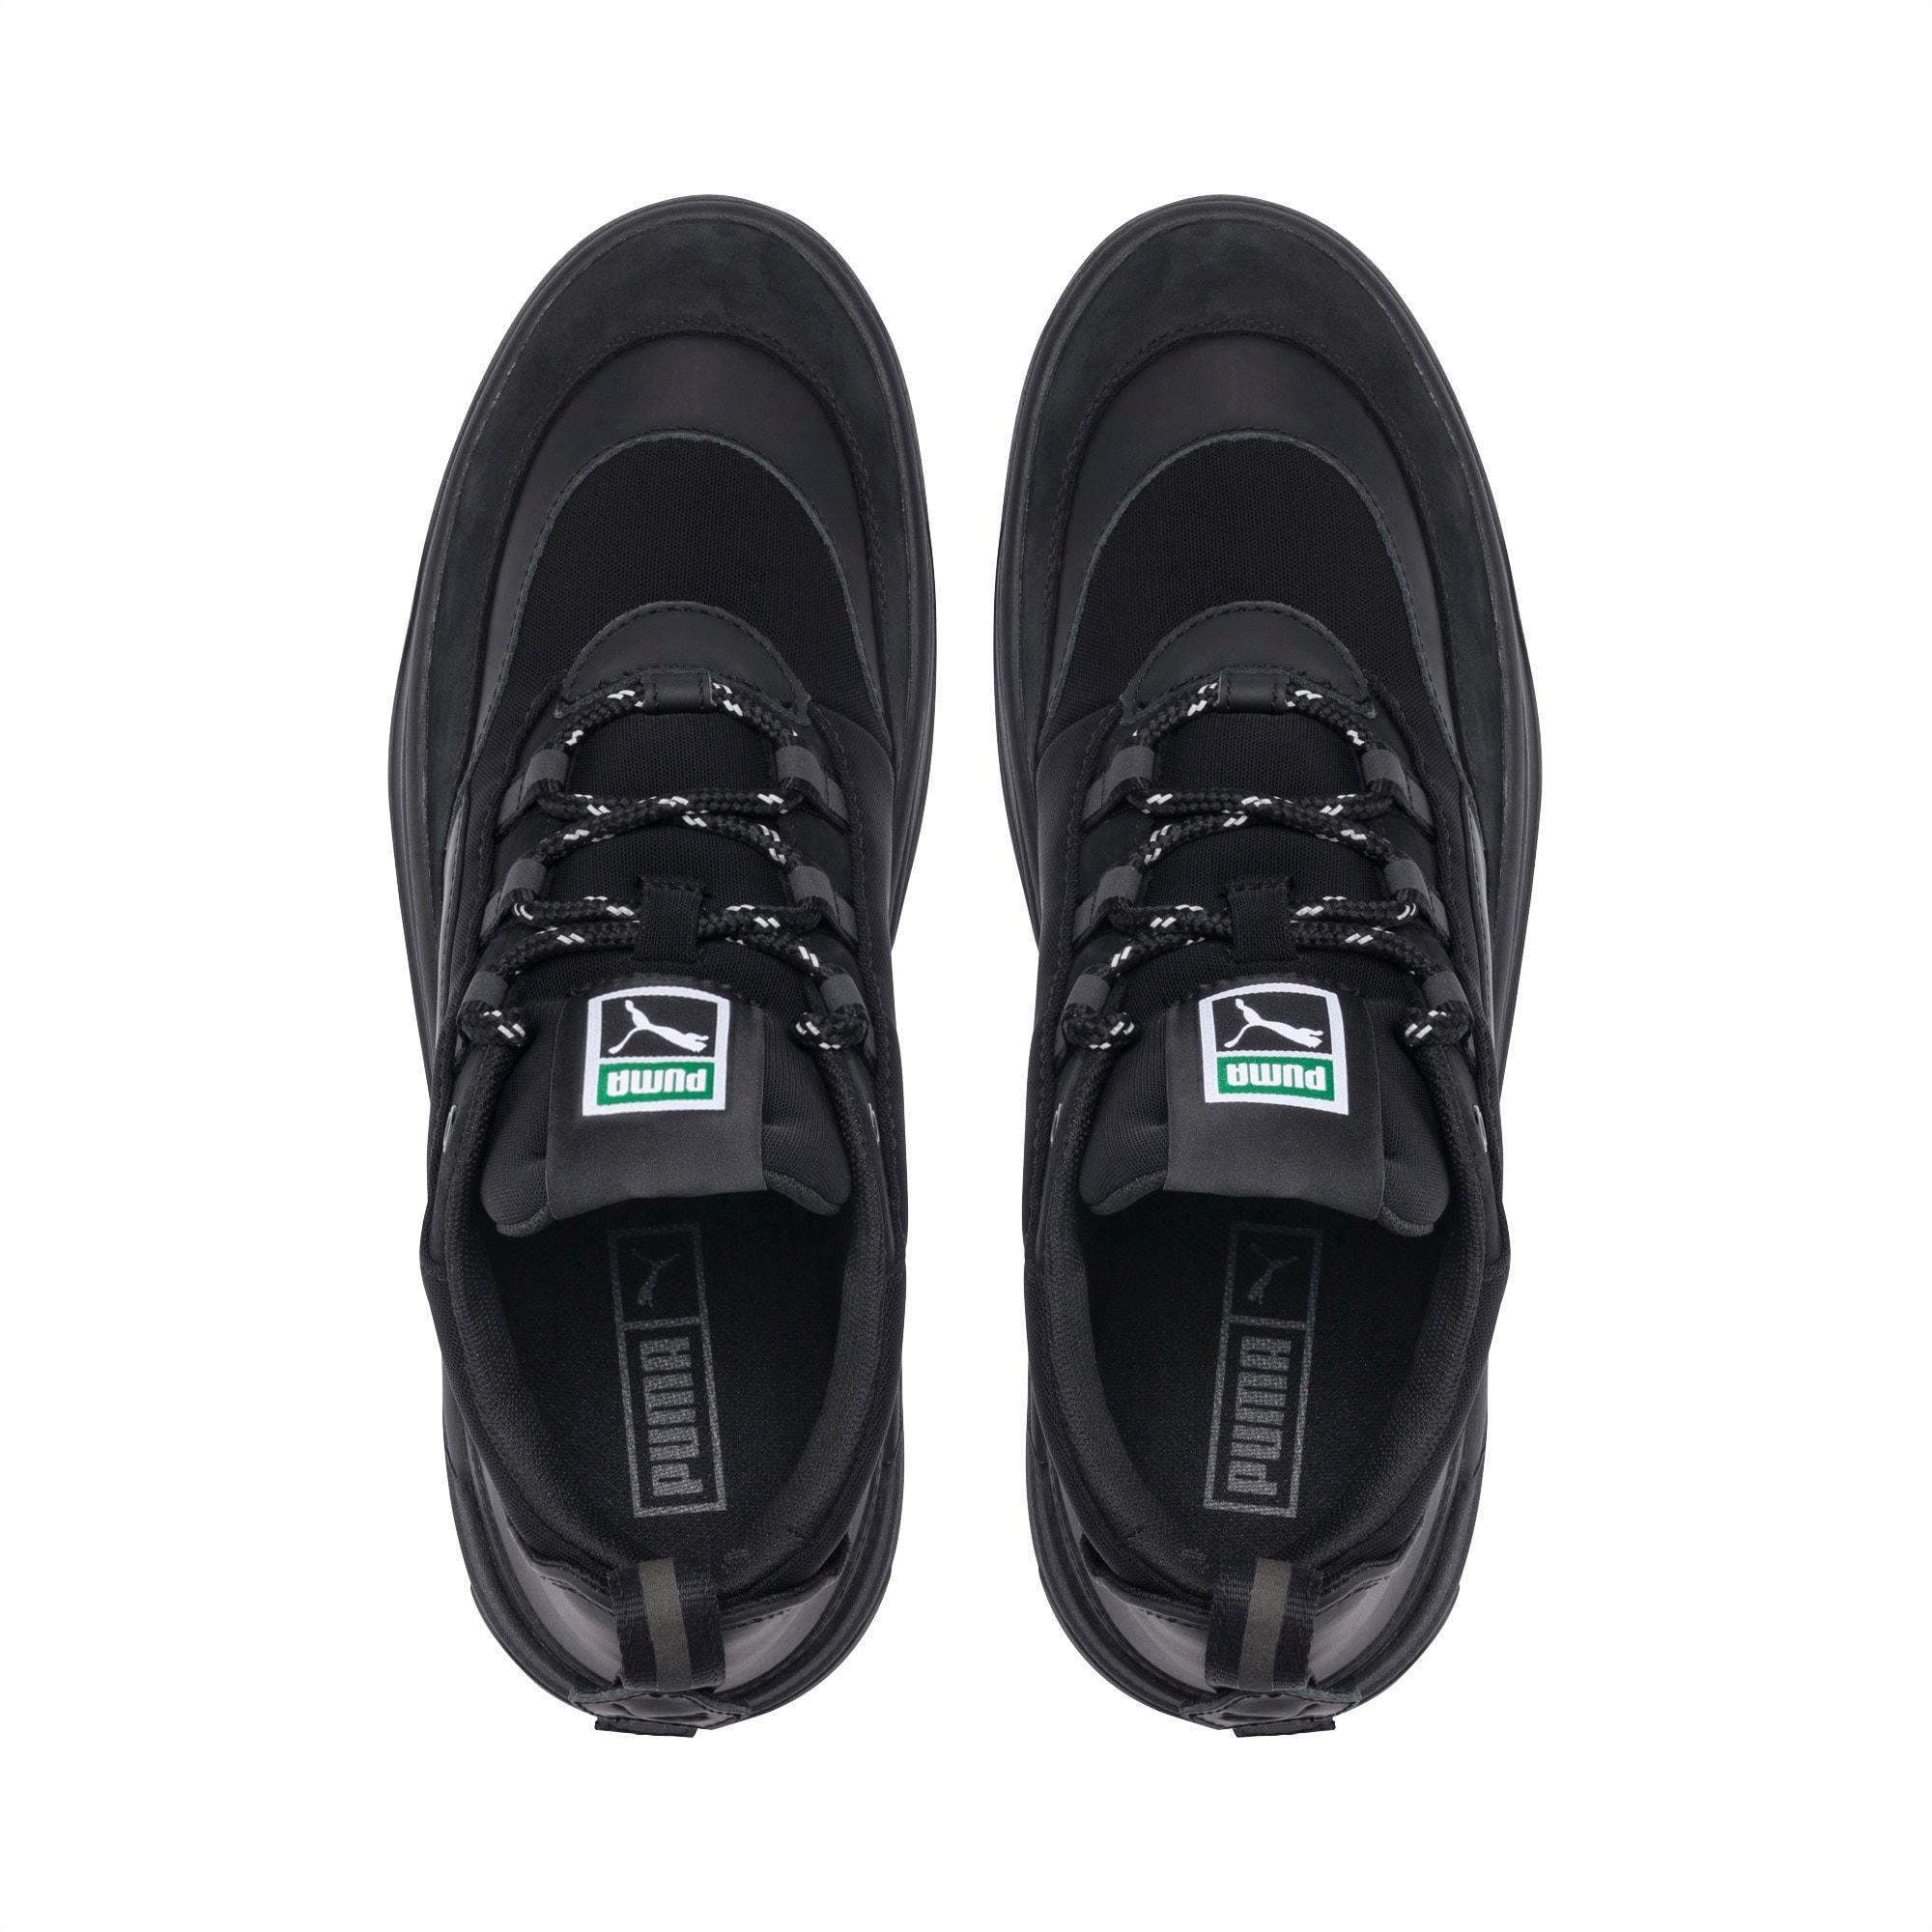 PUMA Leather Cali Zero Demi Triple Black Sneakers for Men - Lyst